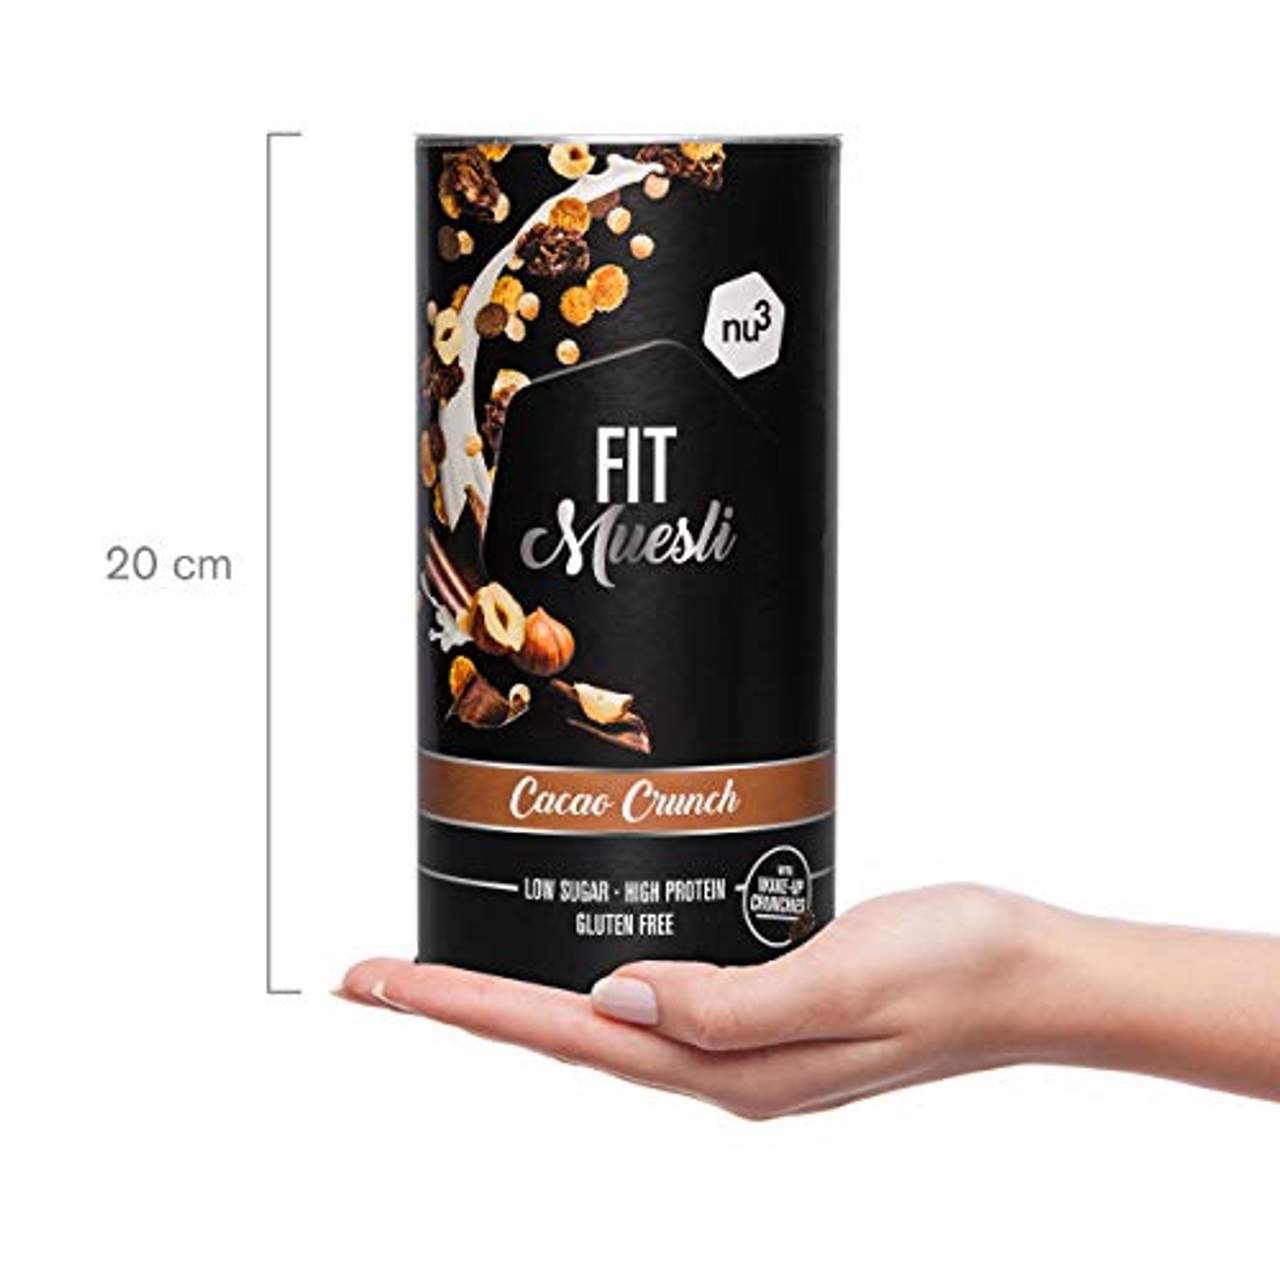 nu3 Fit Protein Müsli Cacao Crunch